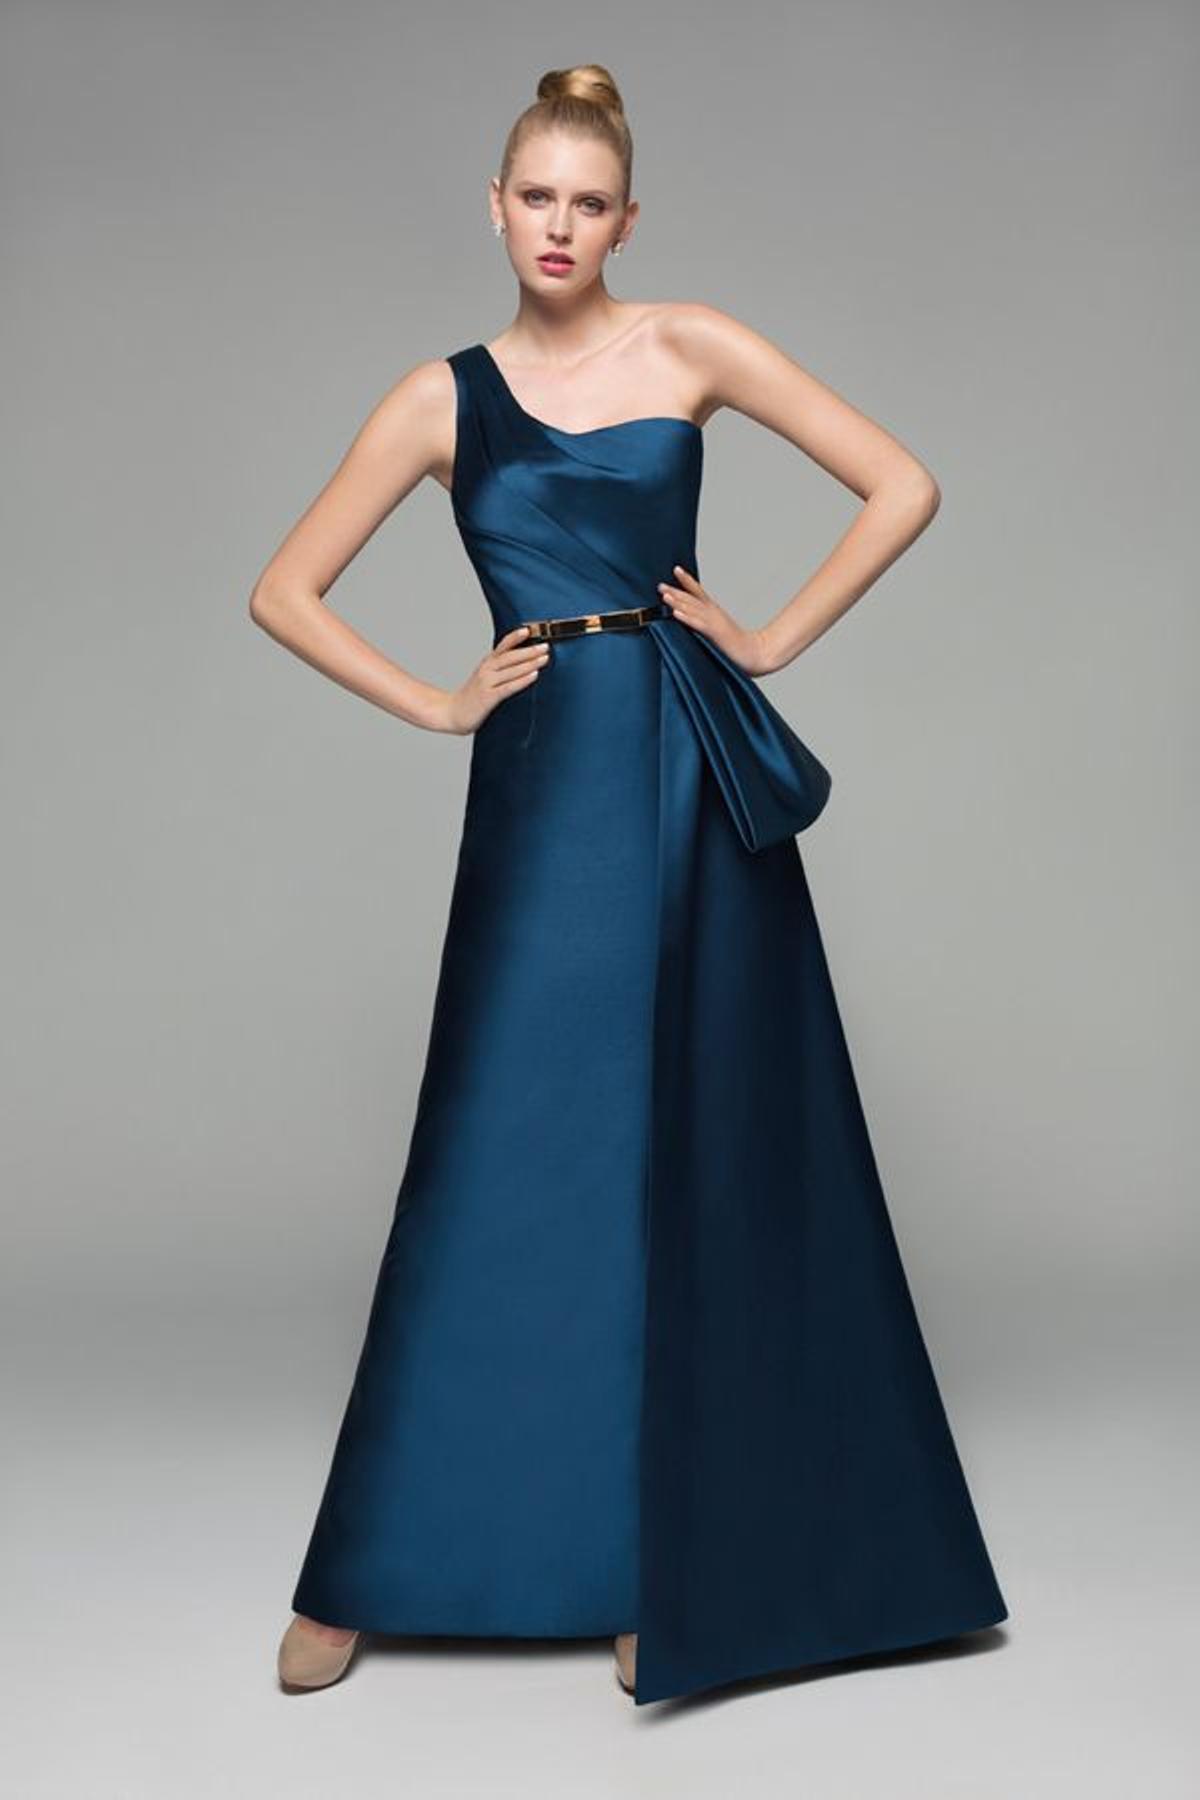 Vestidos de fiesta para bodas de noche: los modelos en azul oscuro nunca pasan de moda